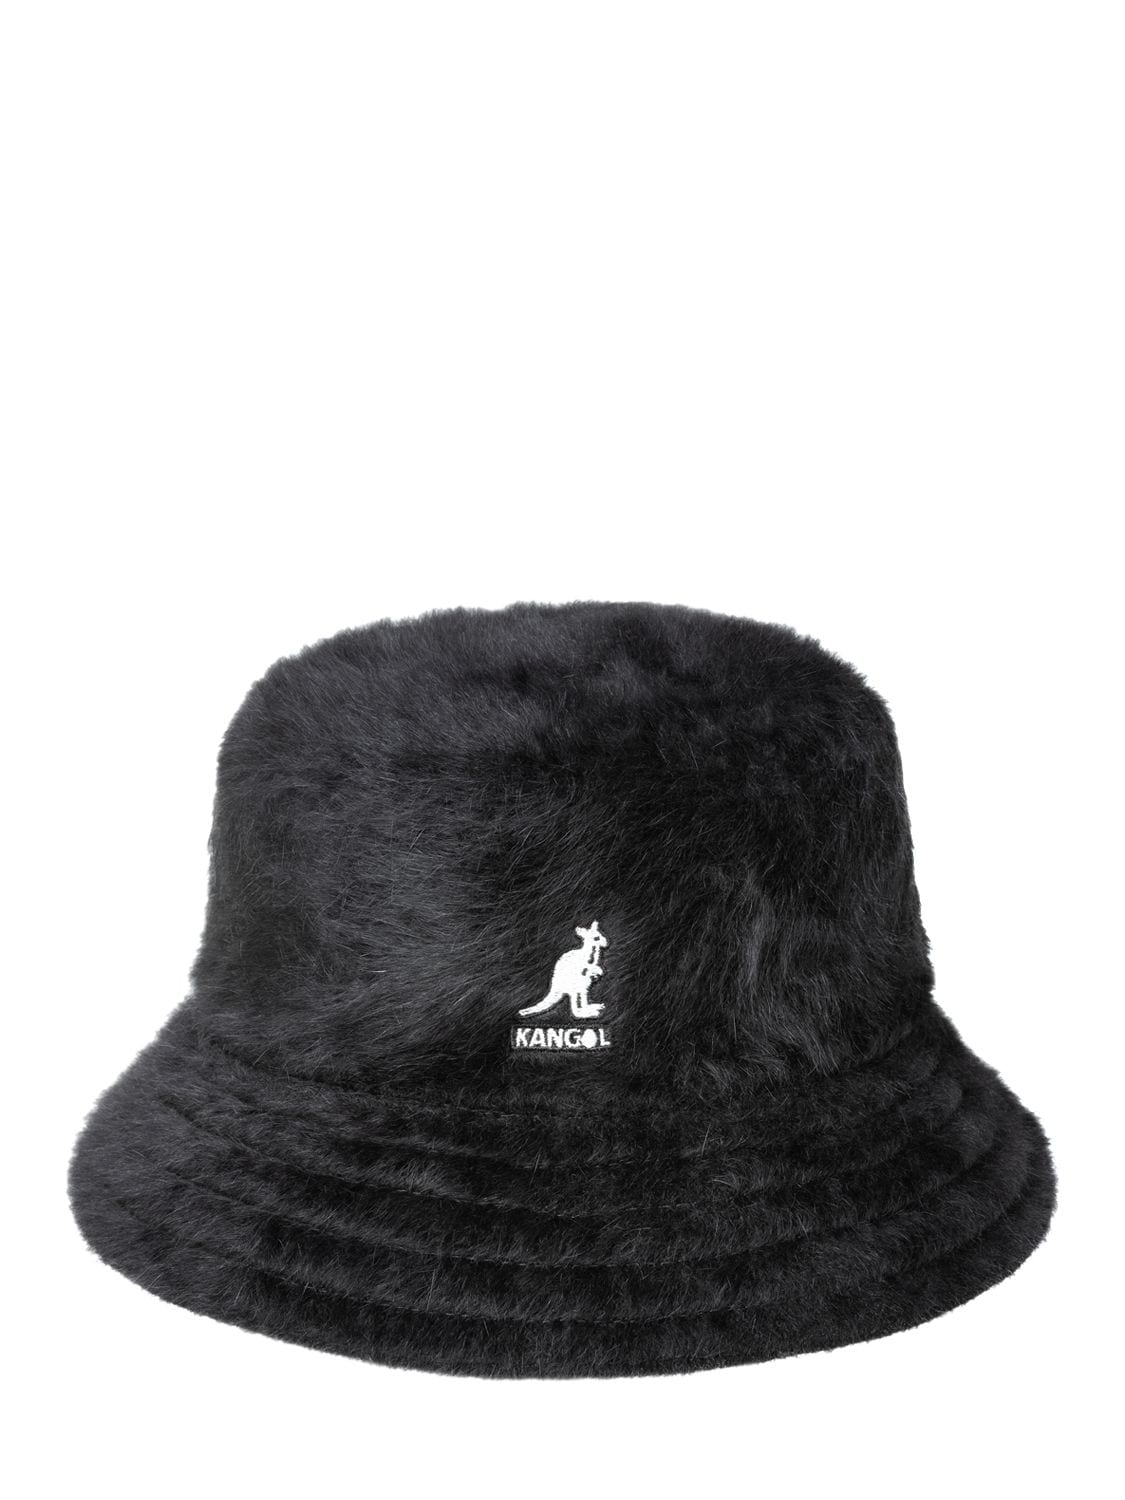 Kangol Furgora Casual Angora Blend Bucket Hat In Black